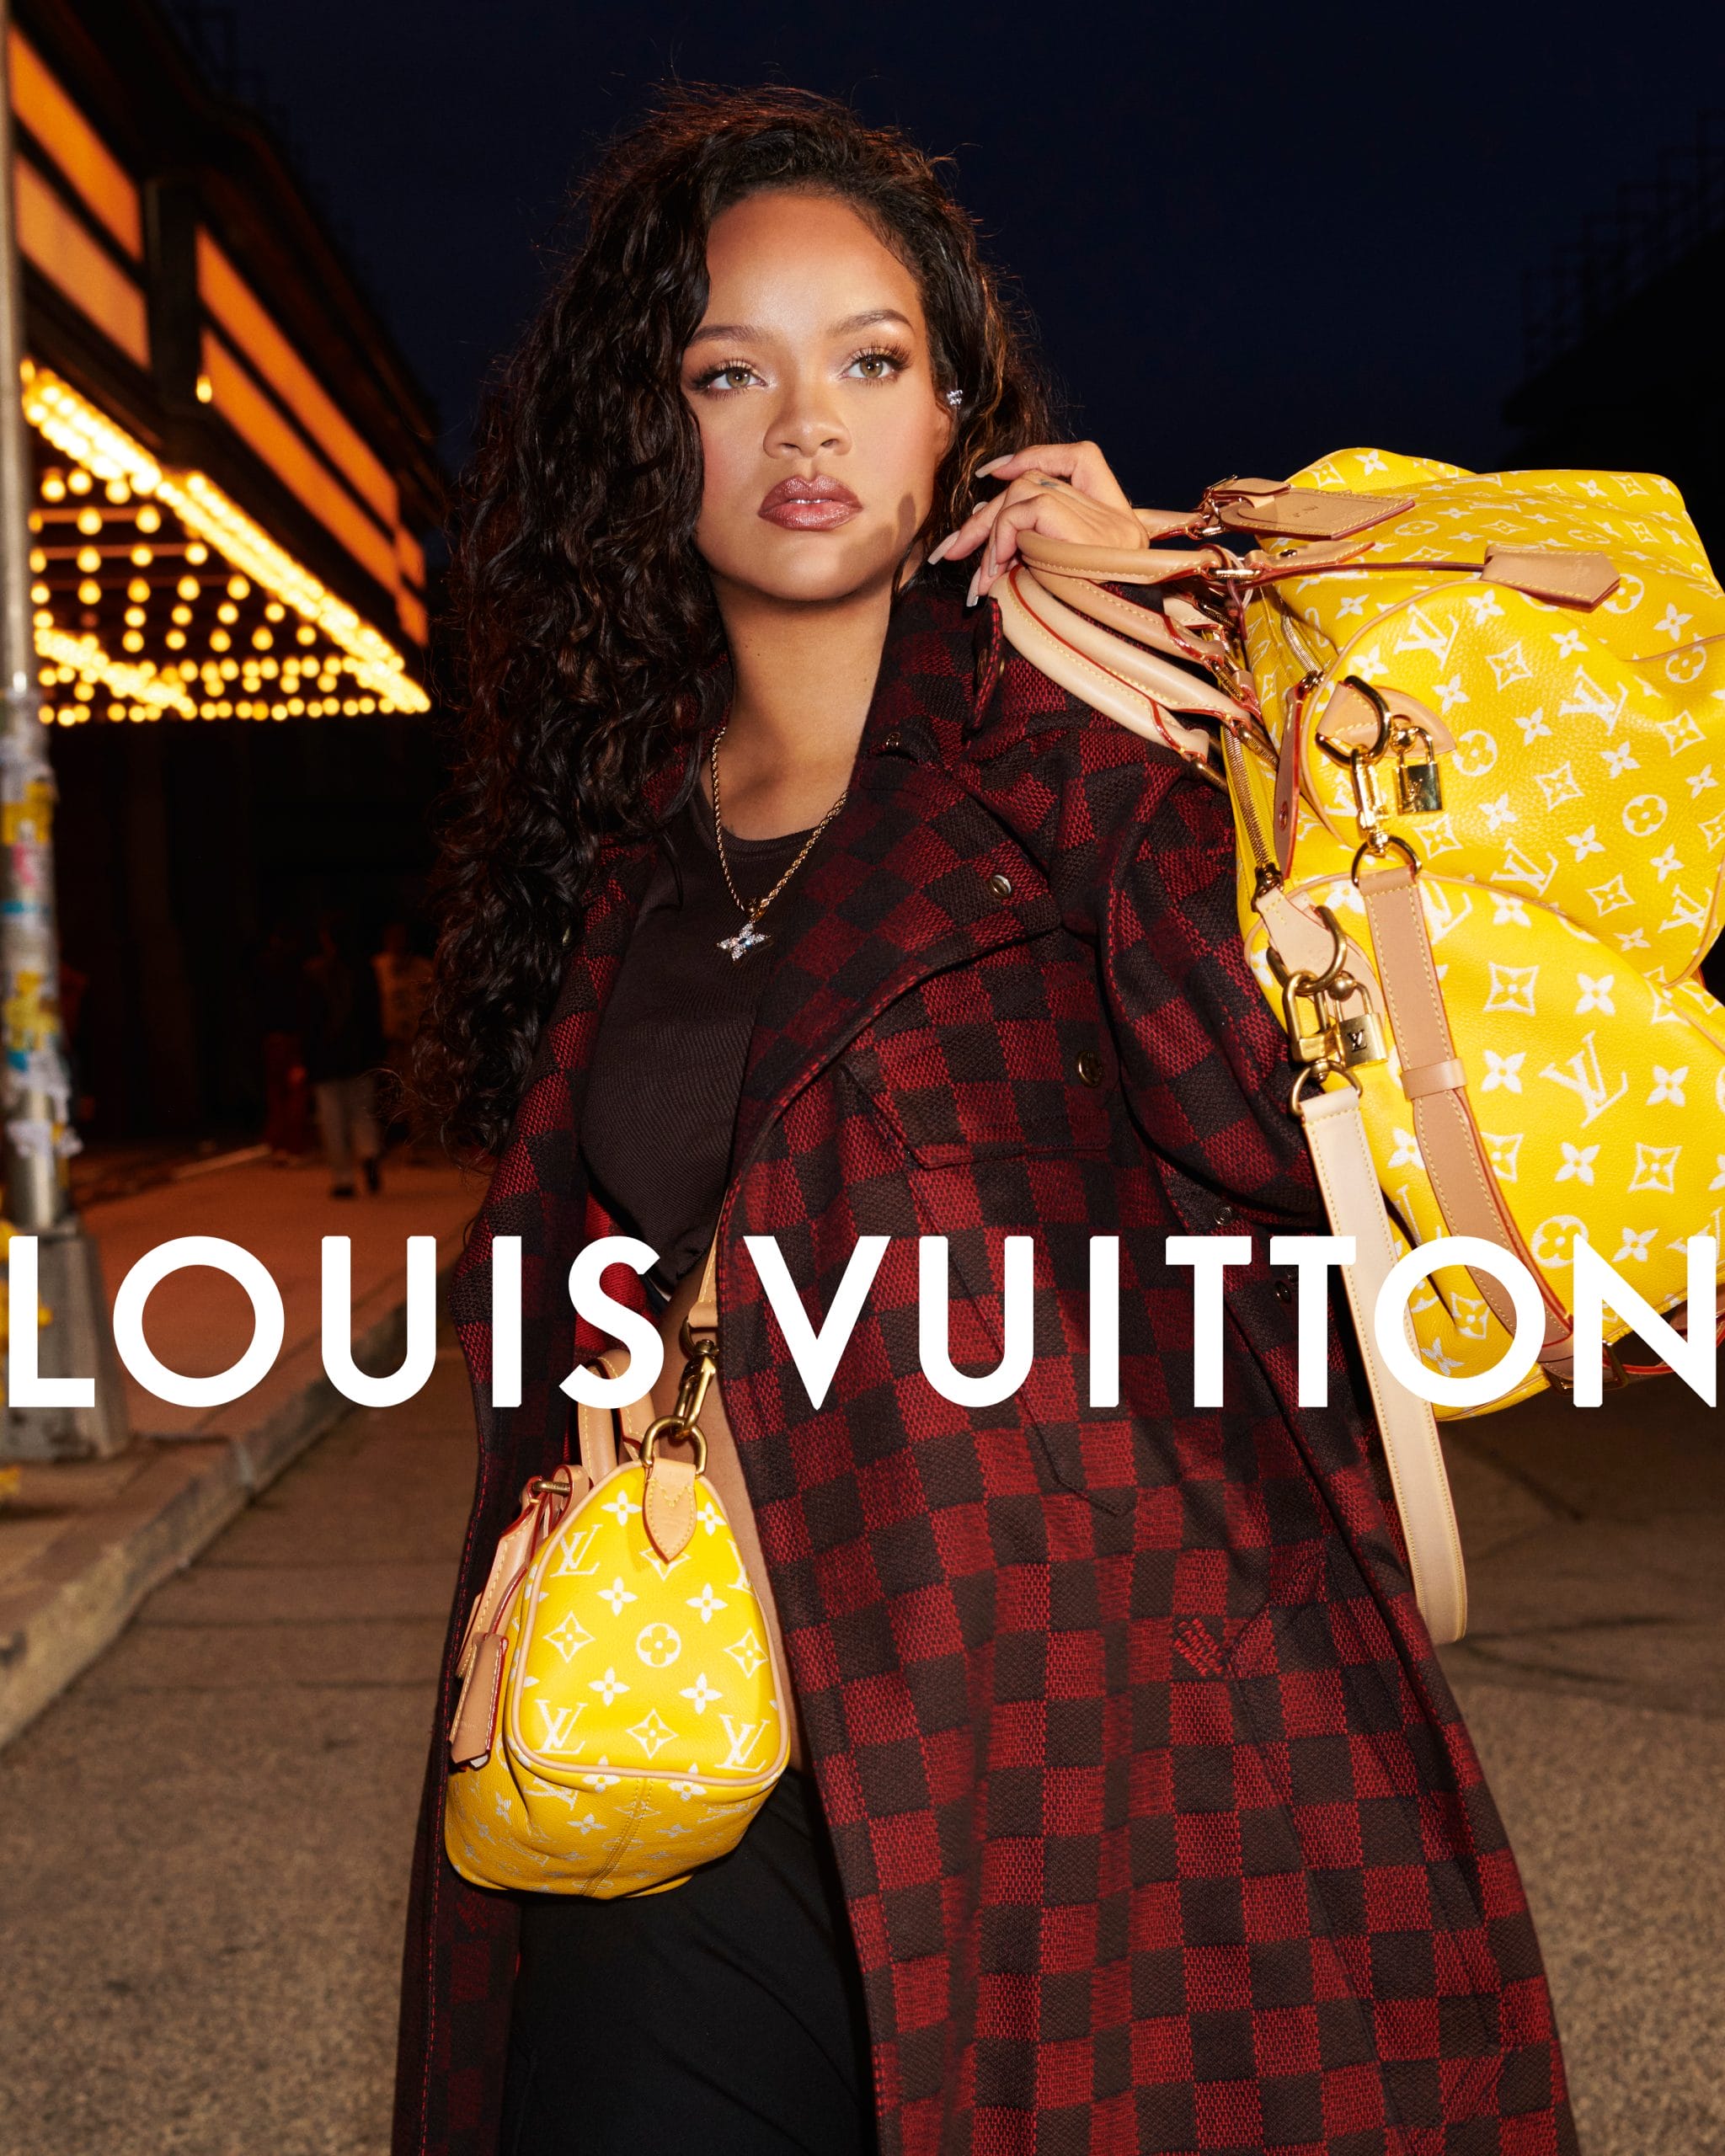 Louis Vuitton: A Debut With Desire